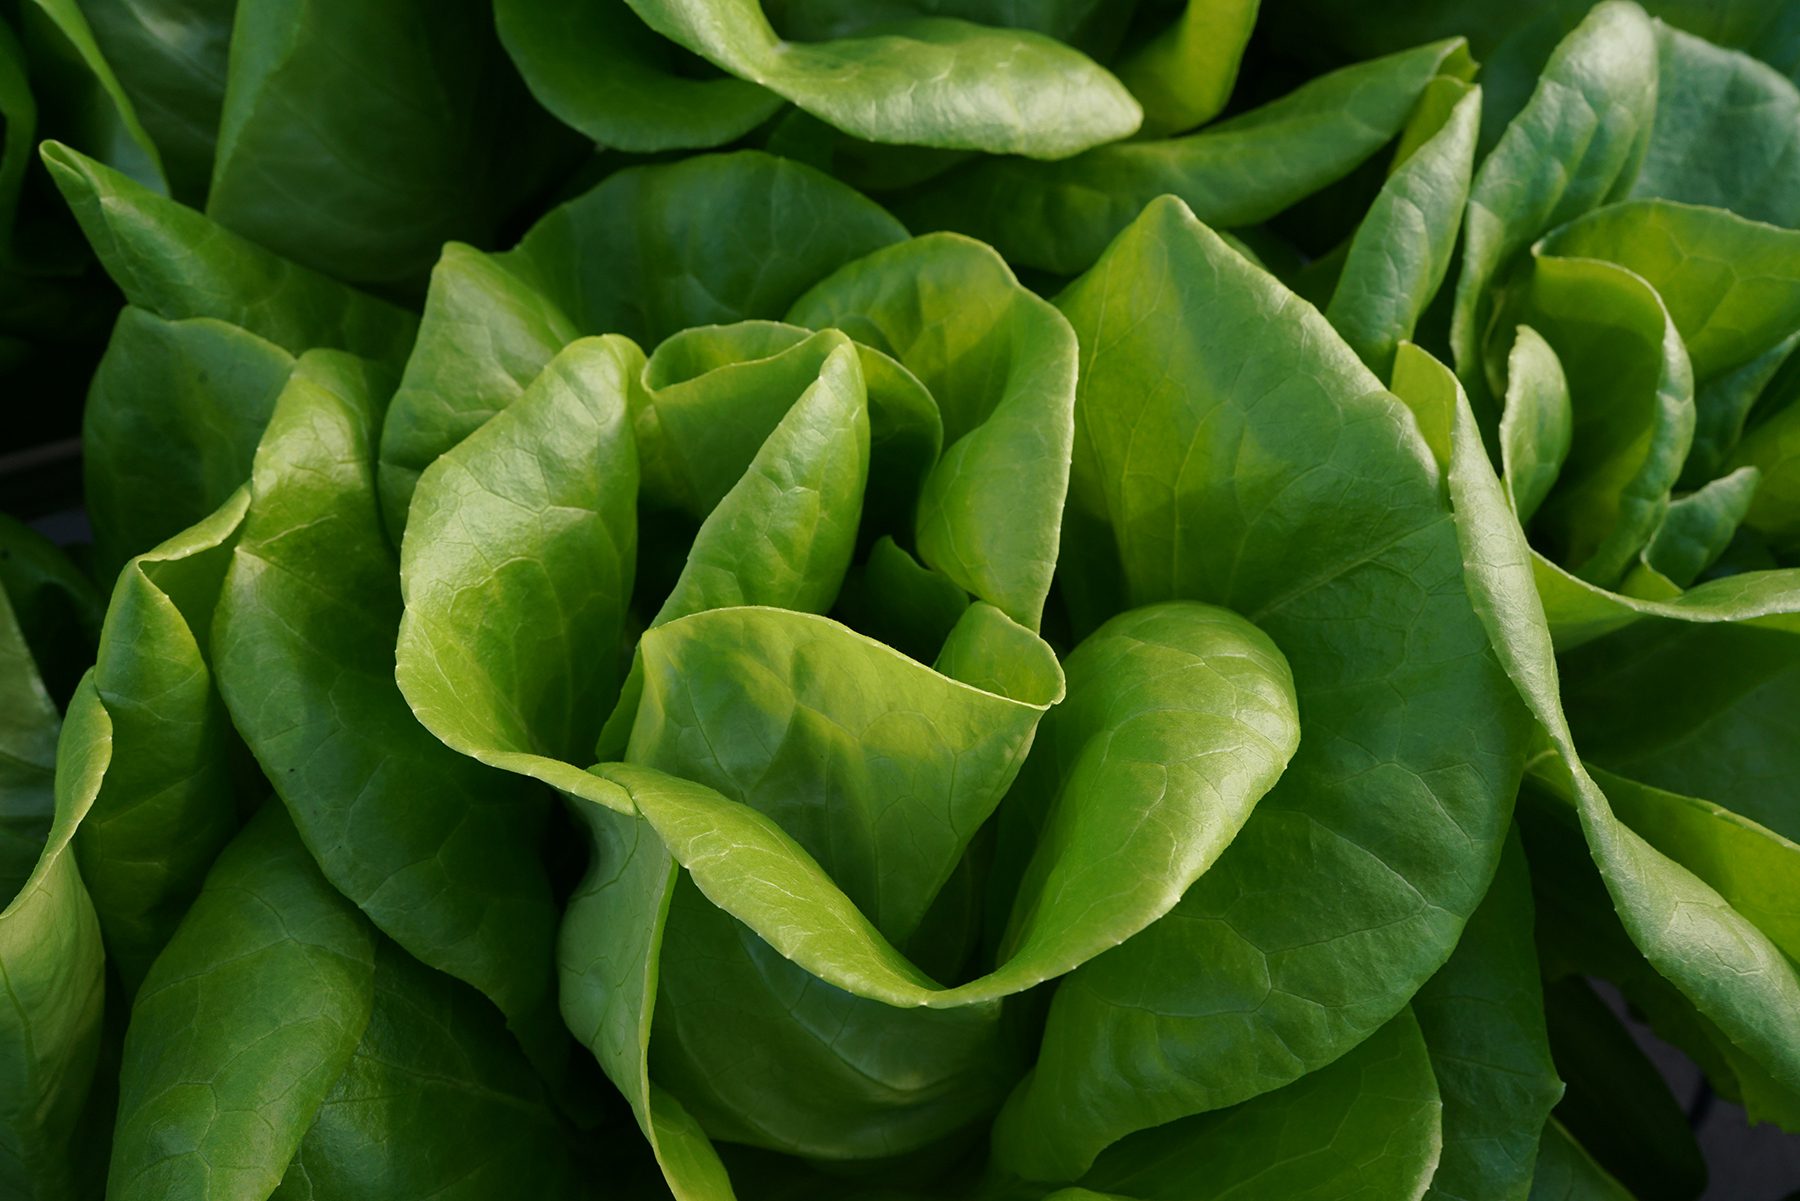 Gotham Greens® Greenhouse Crunch™ Lettuce, 4.5 oz - Kroger